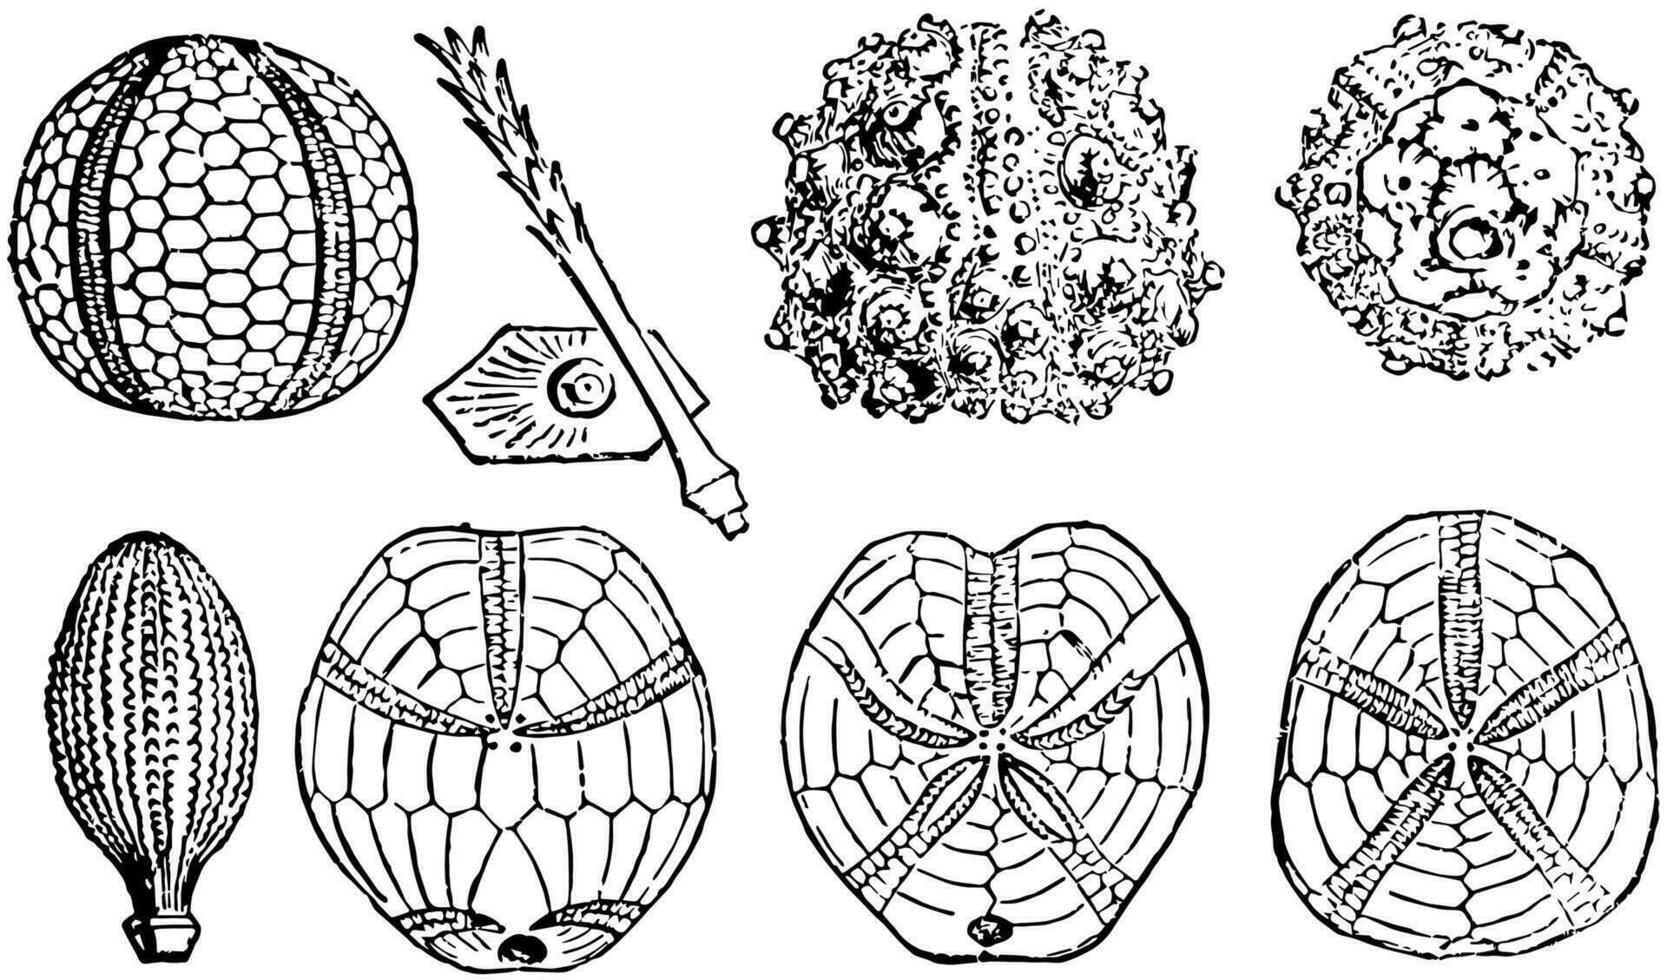 mer oursin fossiles, ancien illustration vecteur